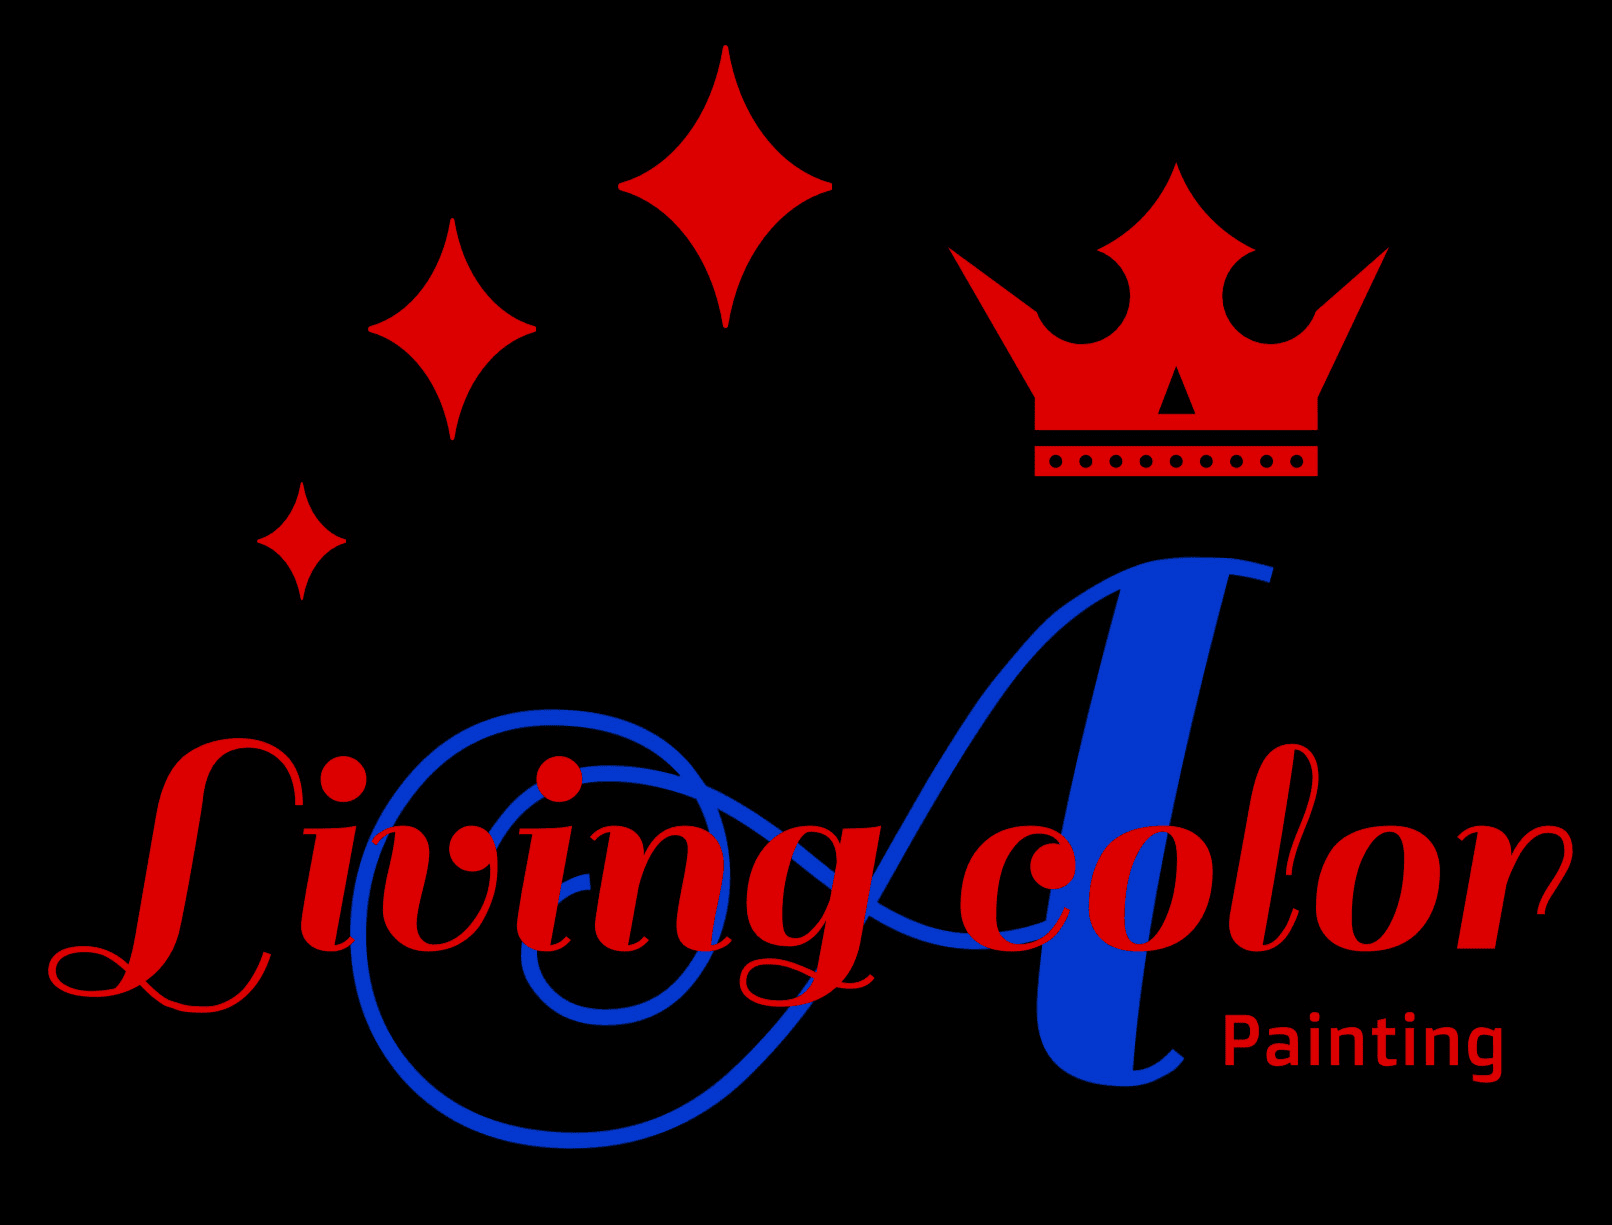 A Living Color